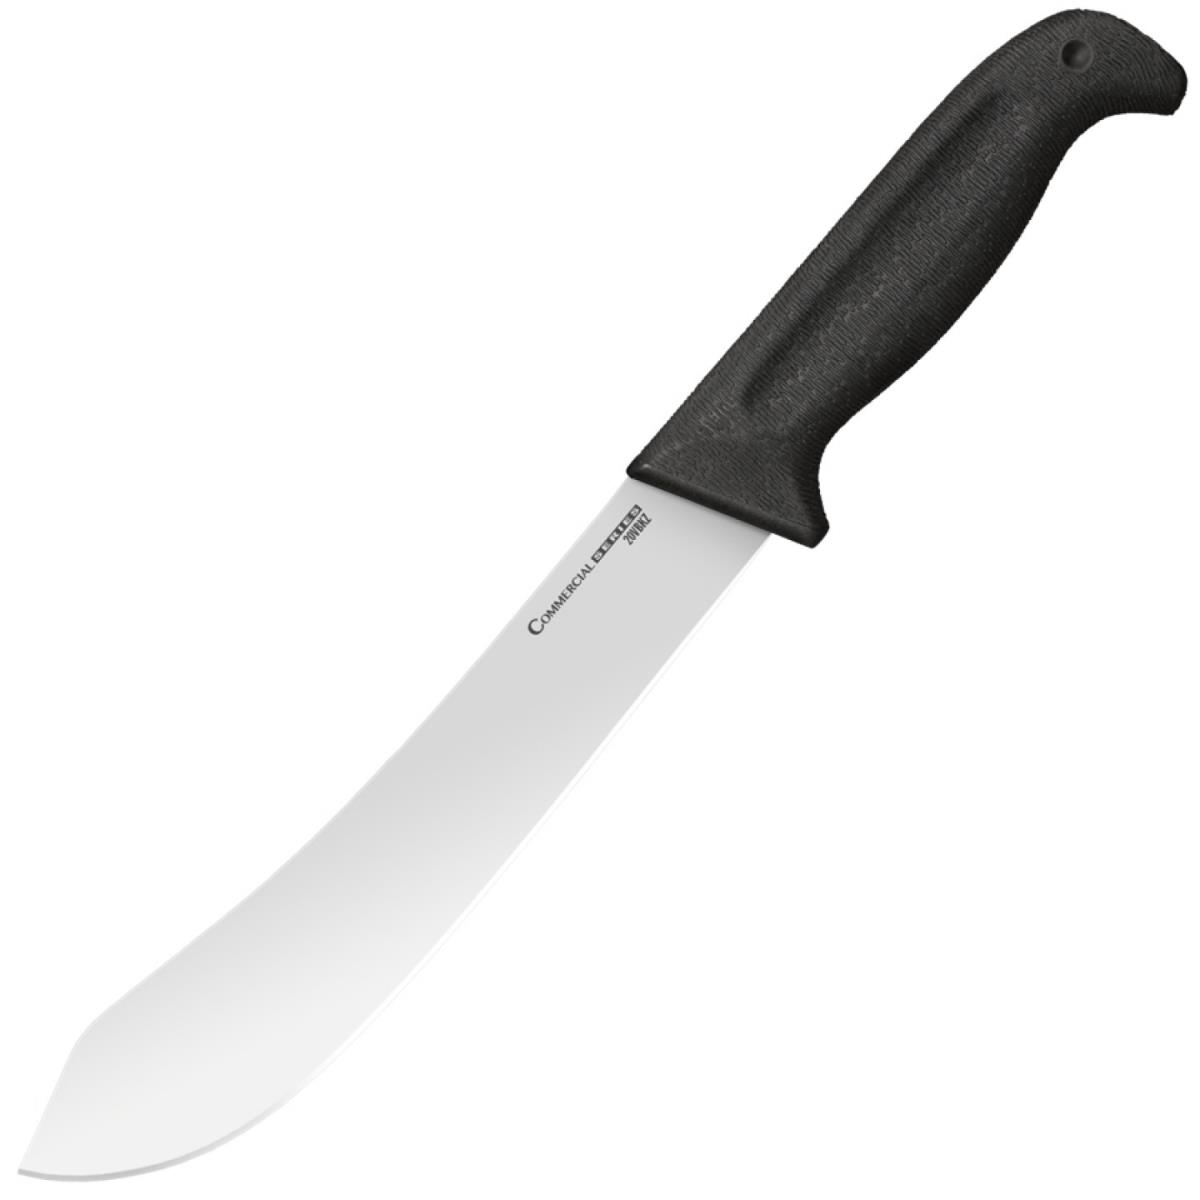 Нож 20VBKZ Butcher Knife мясника фикс., рук-ть Kray-Ex черн, клинок German 4116 20см Cold Steel кованый топор для мяса топор мясника